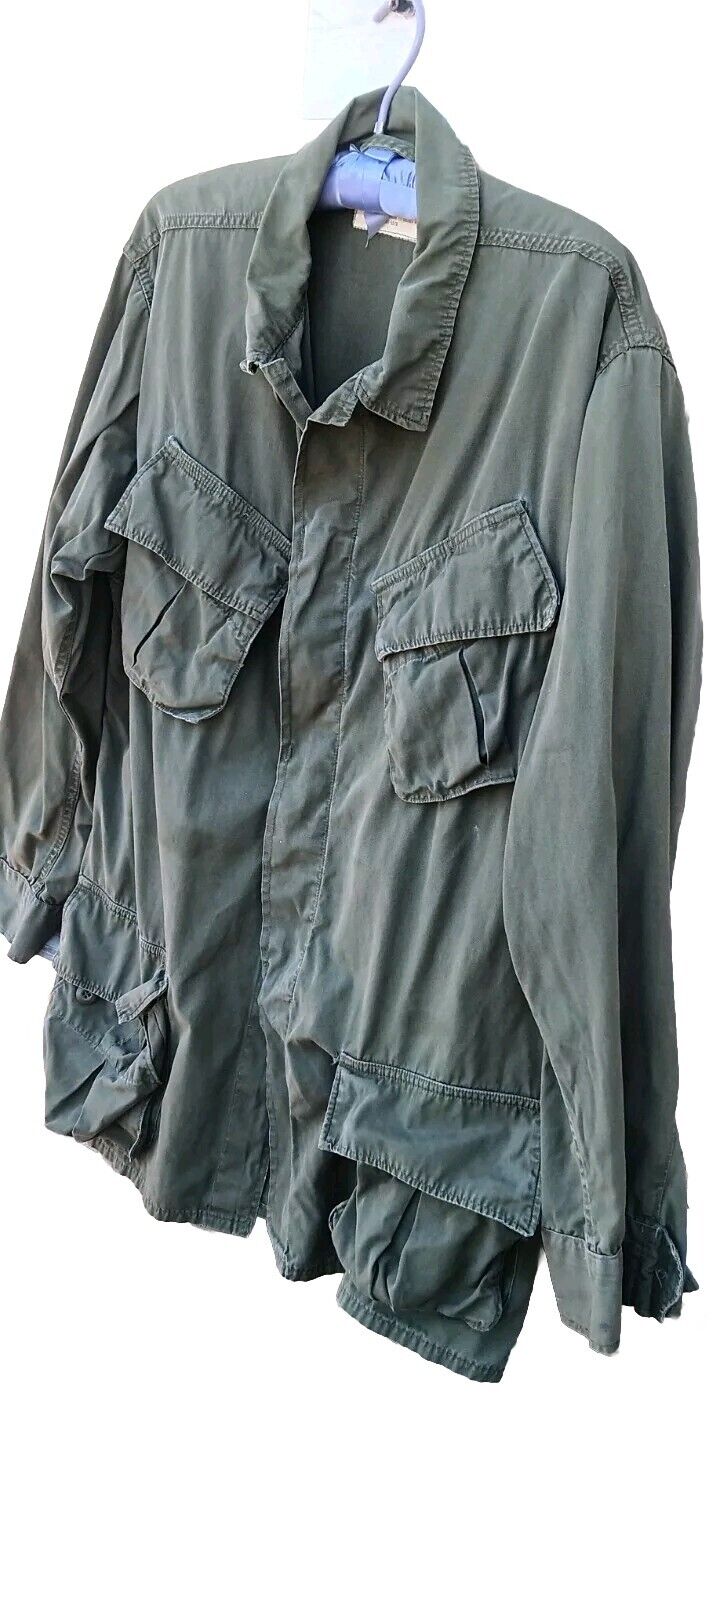 Vietnam Era Tropical Combat Jungle Fatigue Jacket 2nd Pattern Dated Medium Long